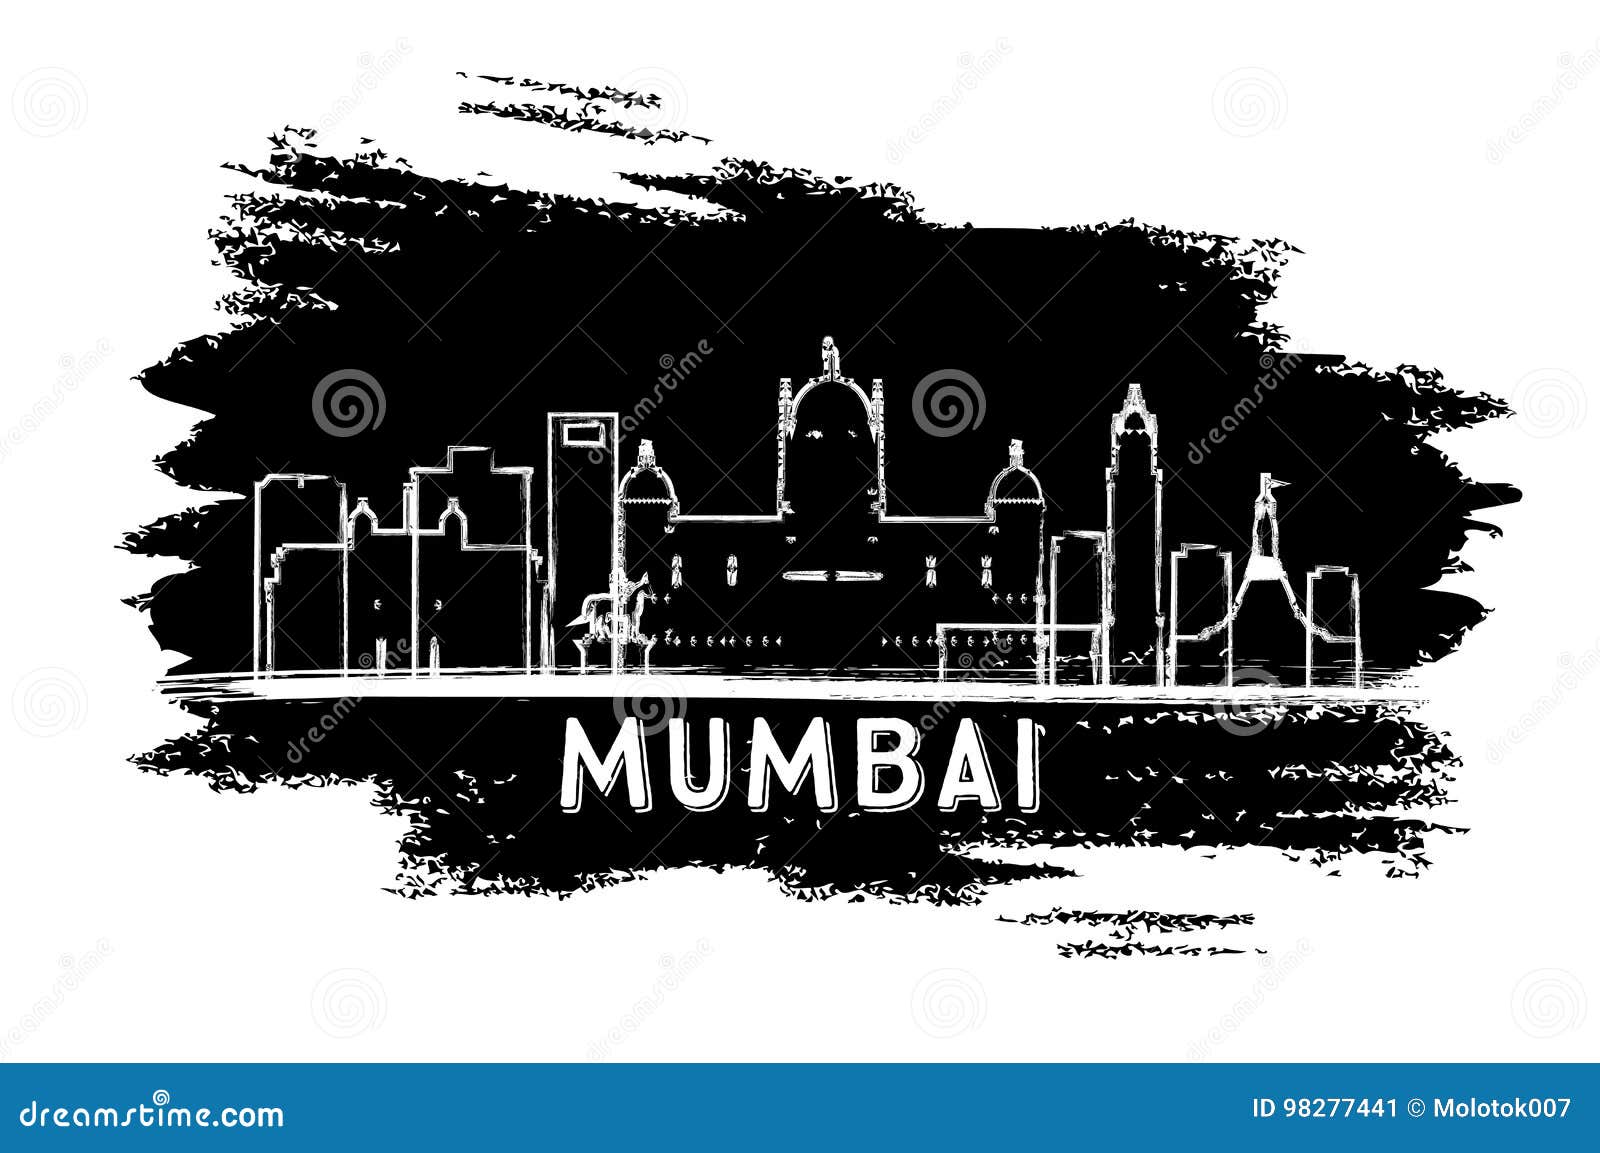 534 Mumbai City Sketches Images Stock Photos  Vectors  Shutterstock